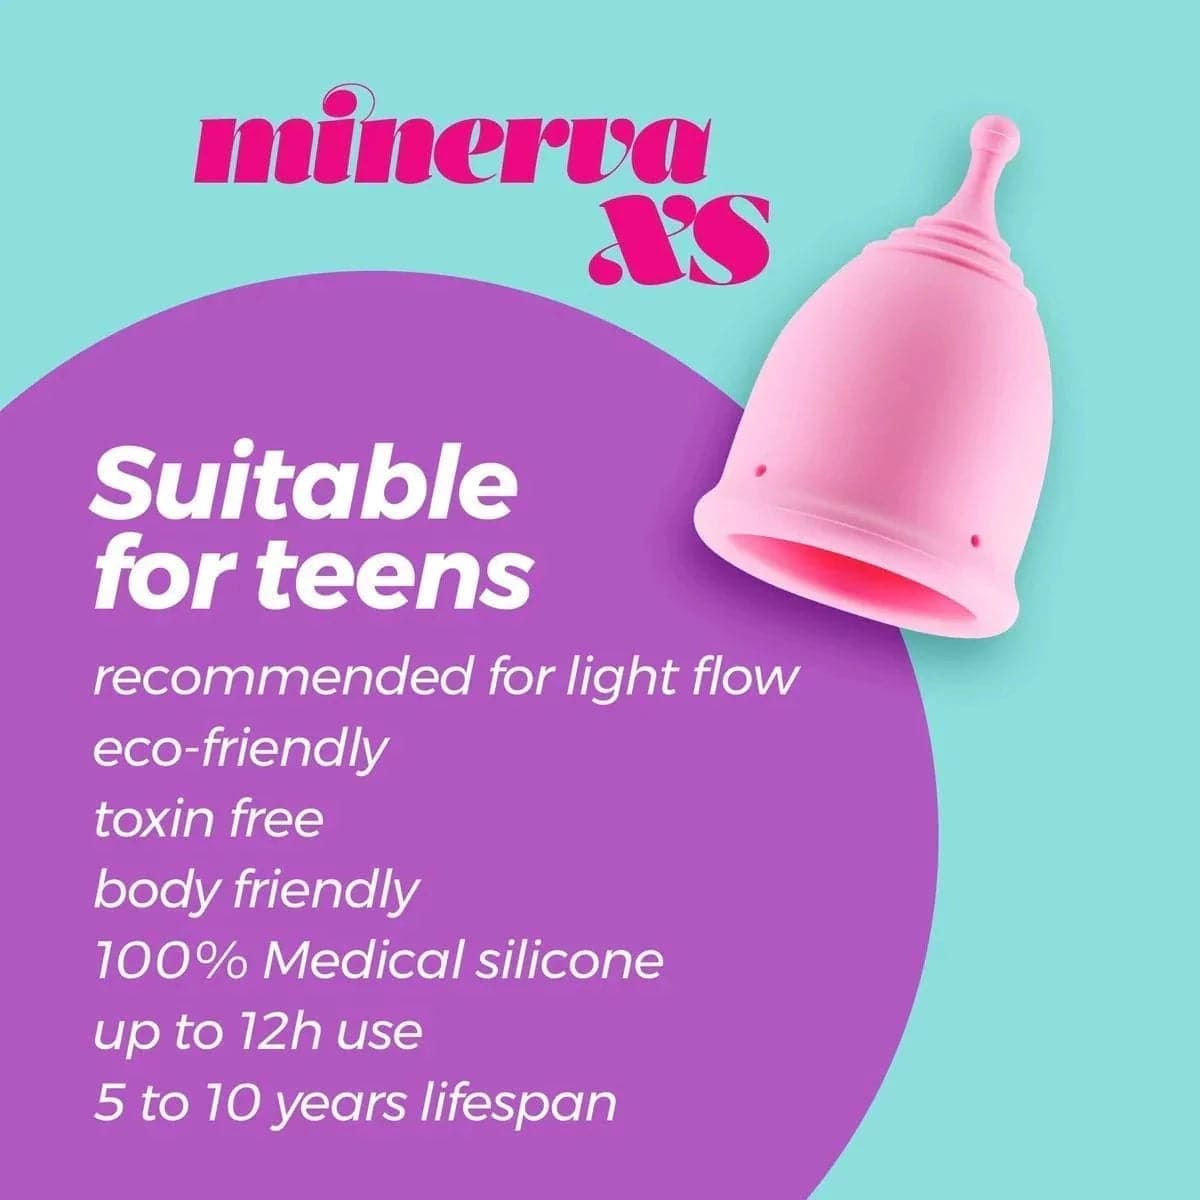 Copo Menstrual Minerva XS 100% Silicone, 18ml, 5.5cm Ø3.8cm - Pérola SexShop